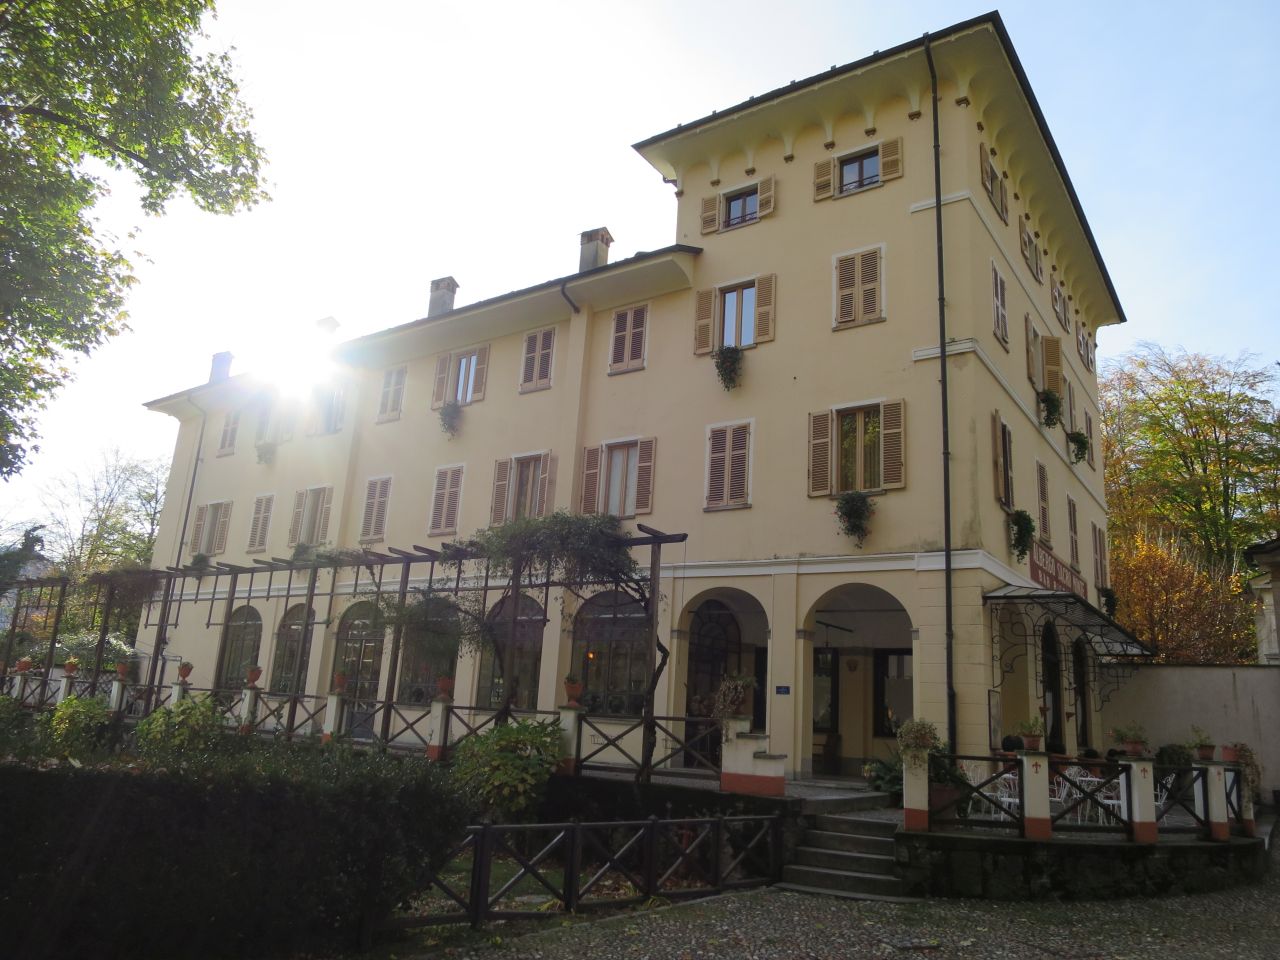 Albergo del Sacro Monte (albergo) - Varallo (VC)  (XVI; XVI)